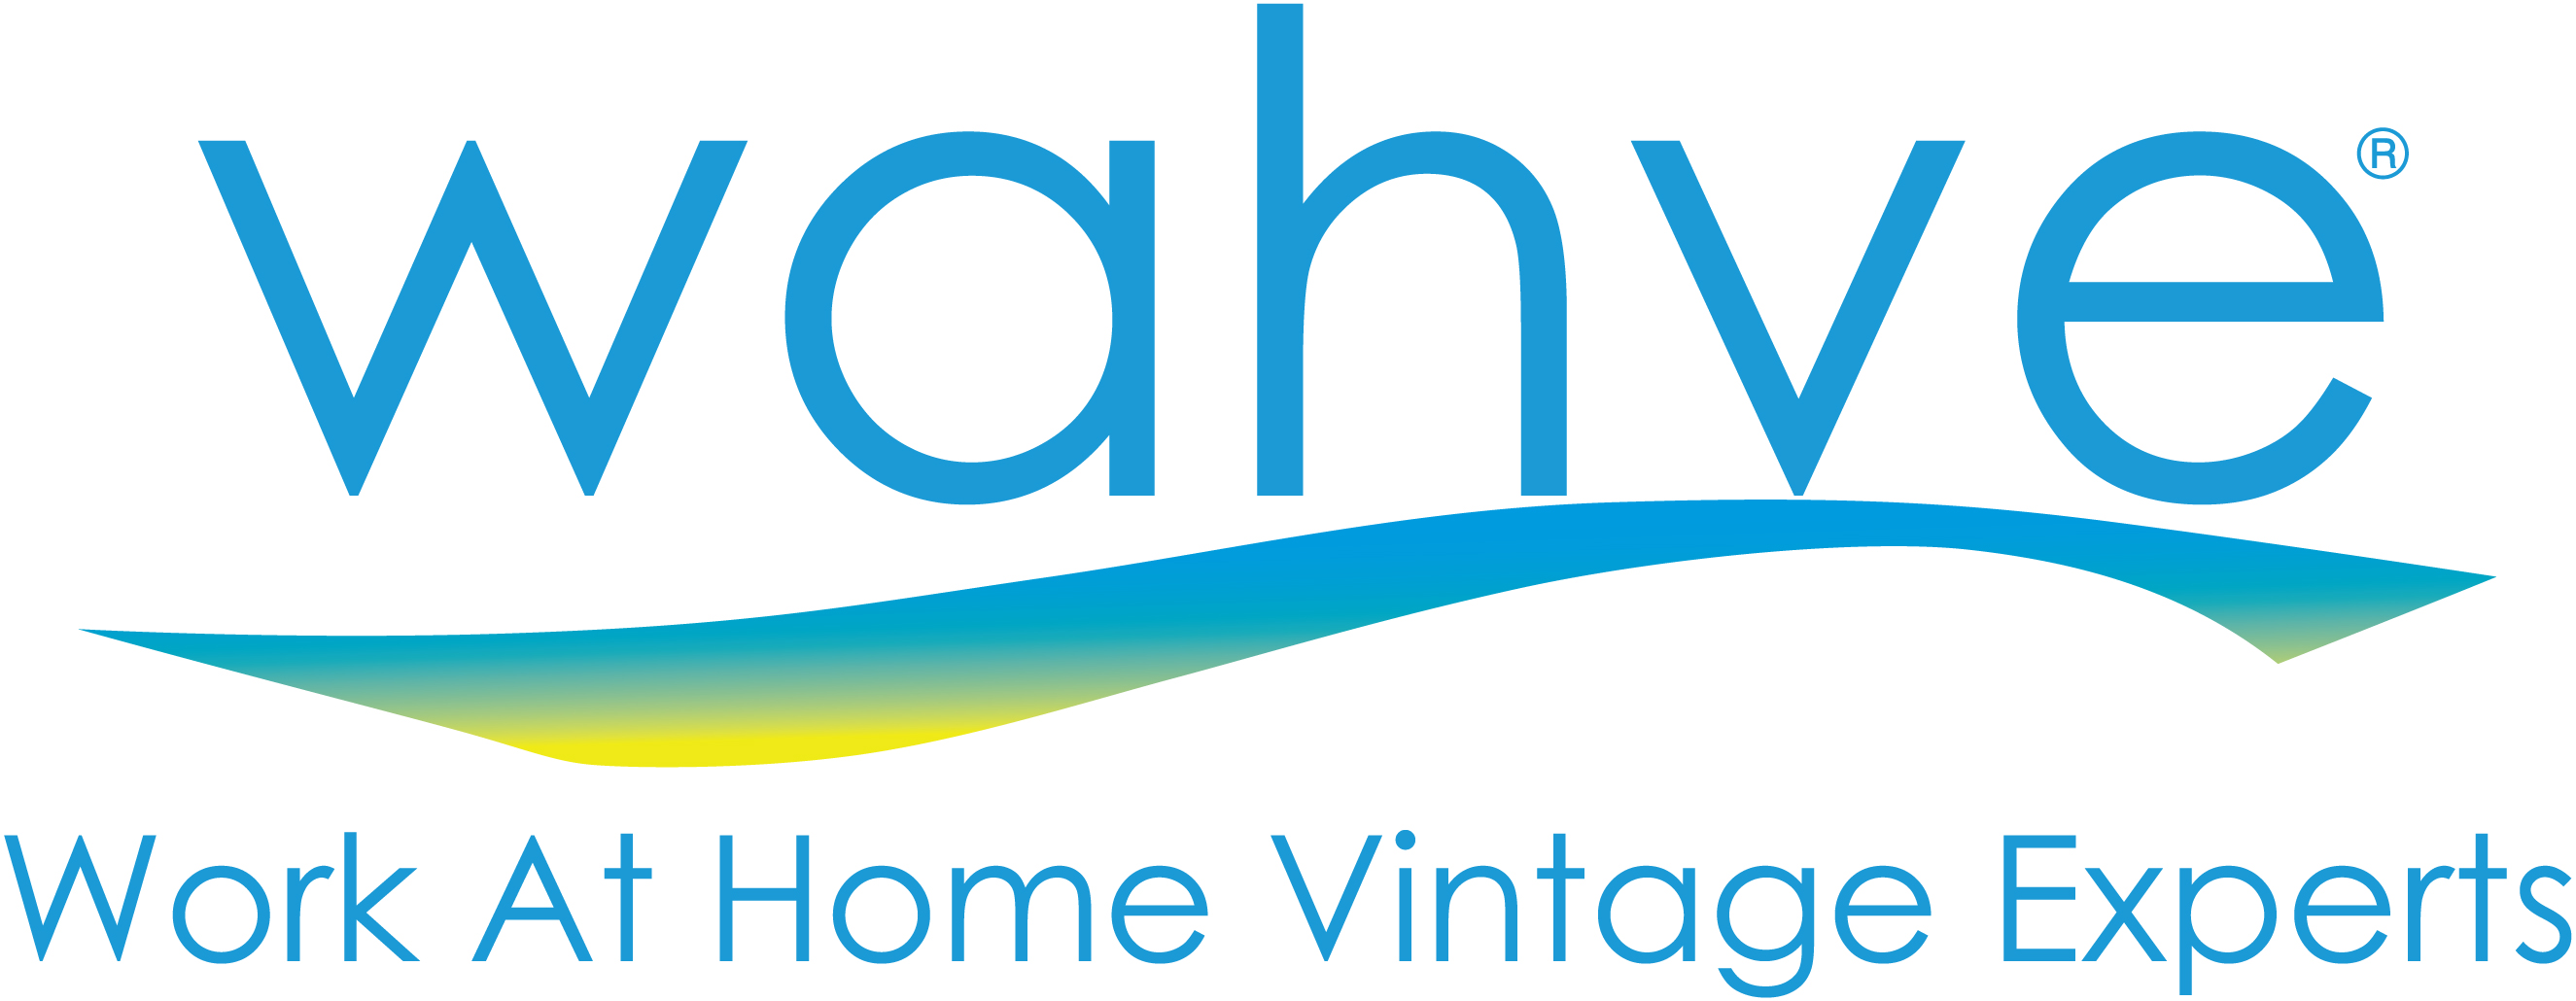 WAHVE 2016 logo.jpg